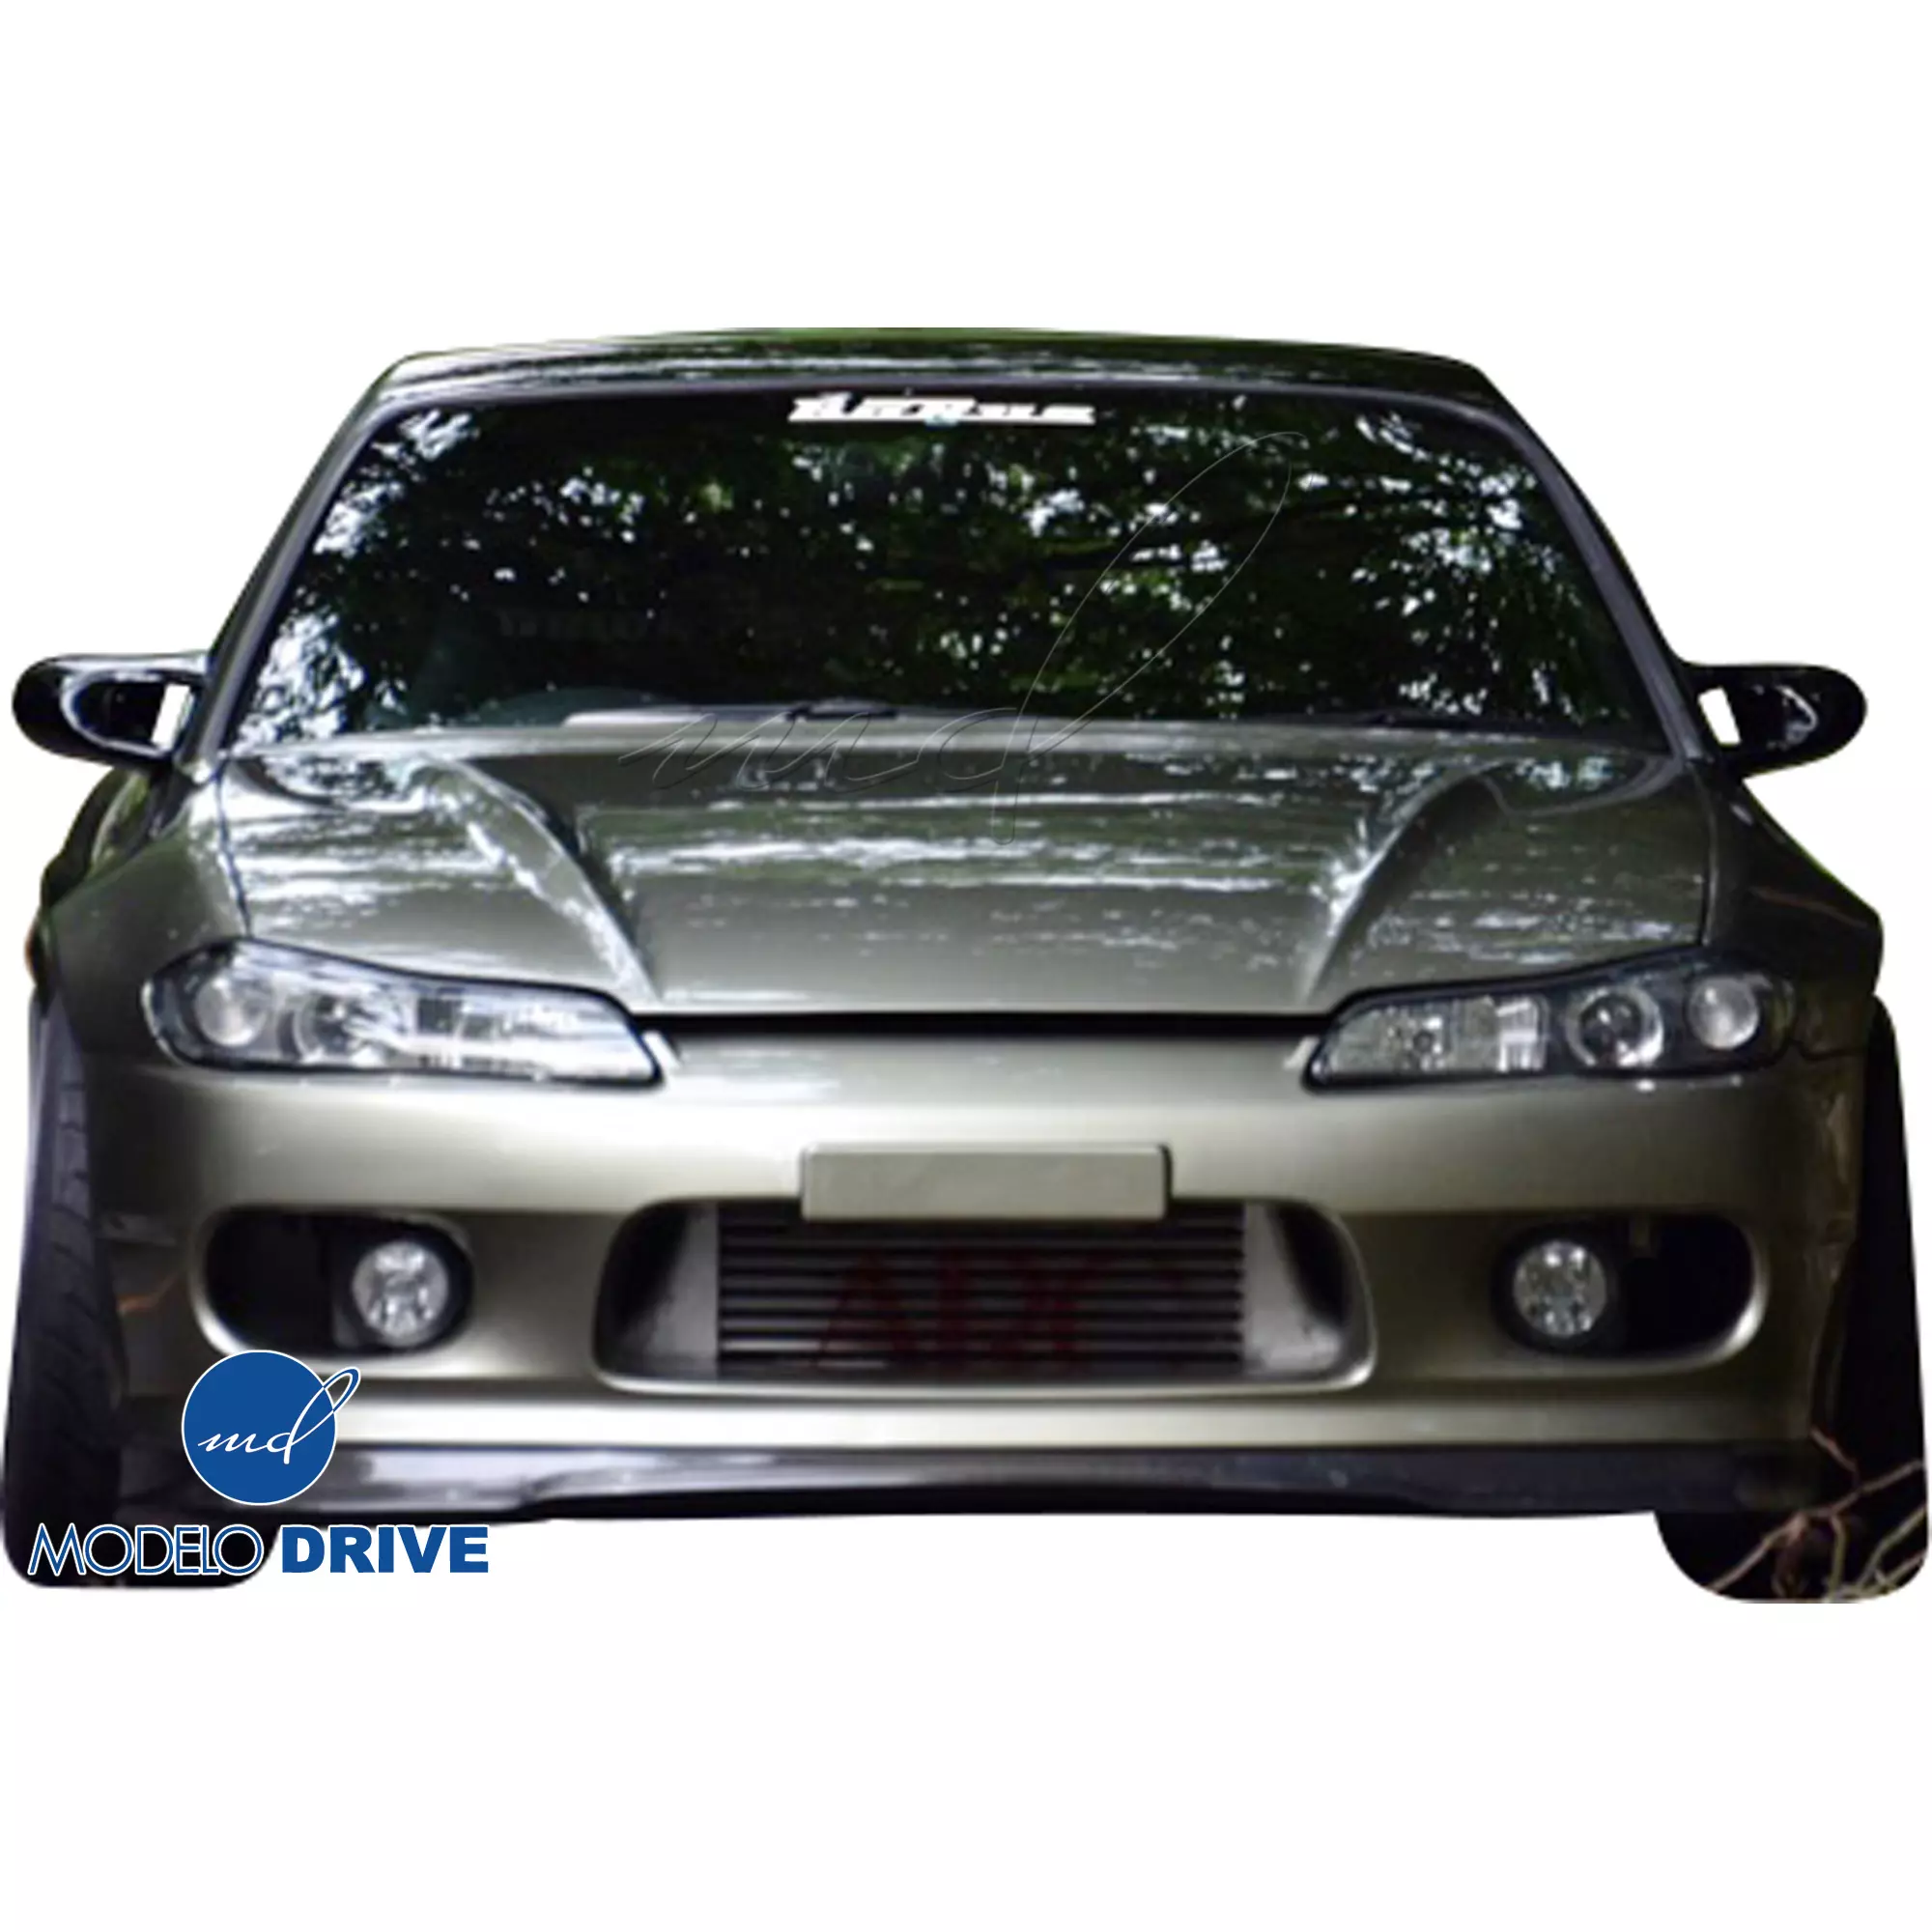 ModeloDrive Carbon Fiber AFLU Front Lip Diffuser > Nissan Silvia S15 1999-2002 - Image 4